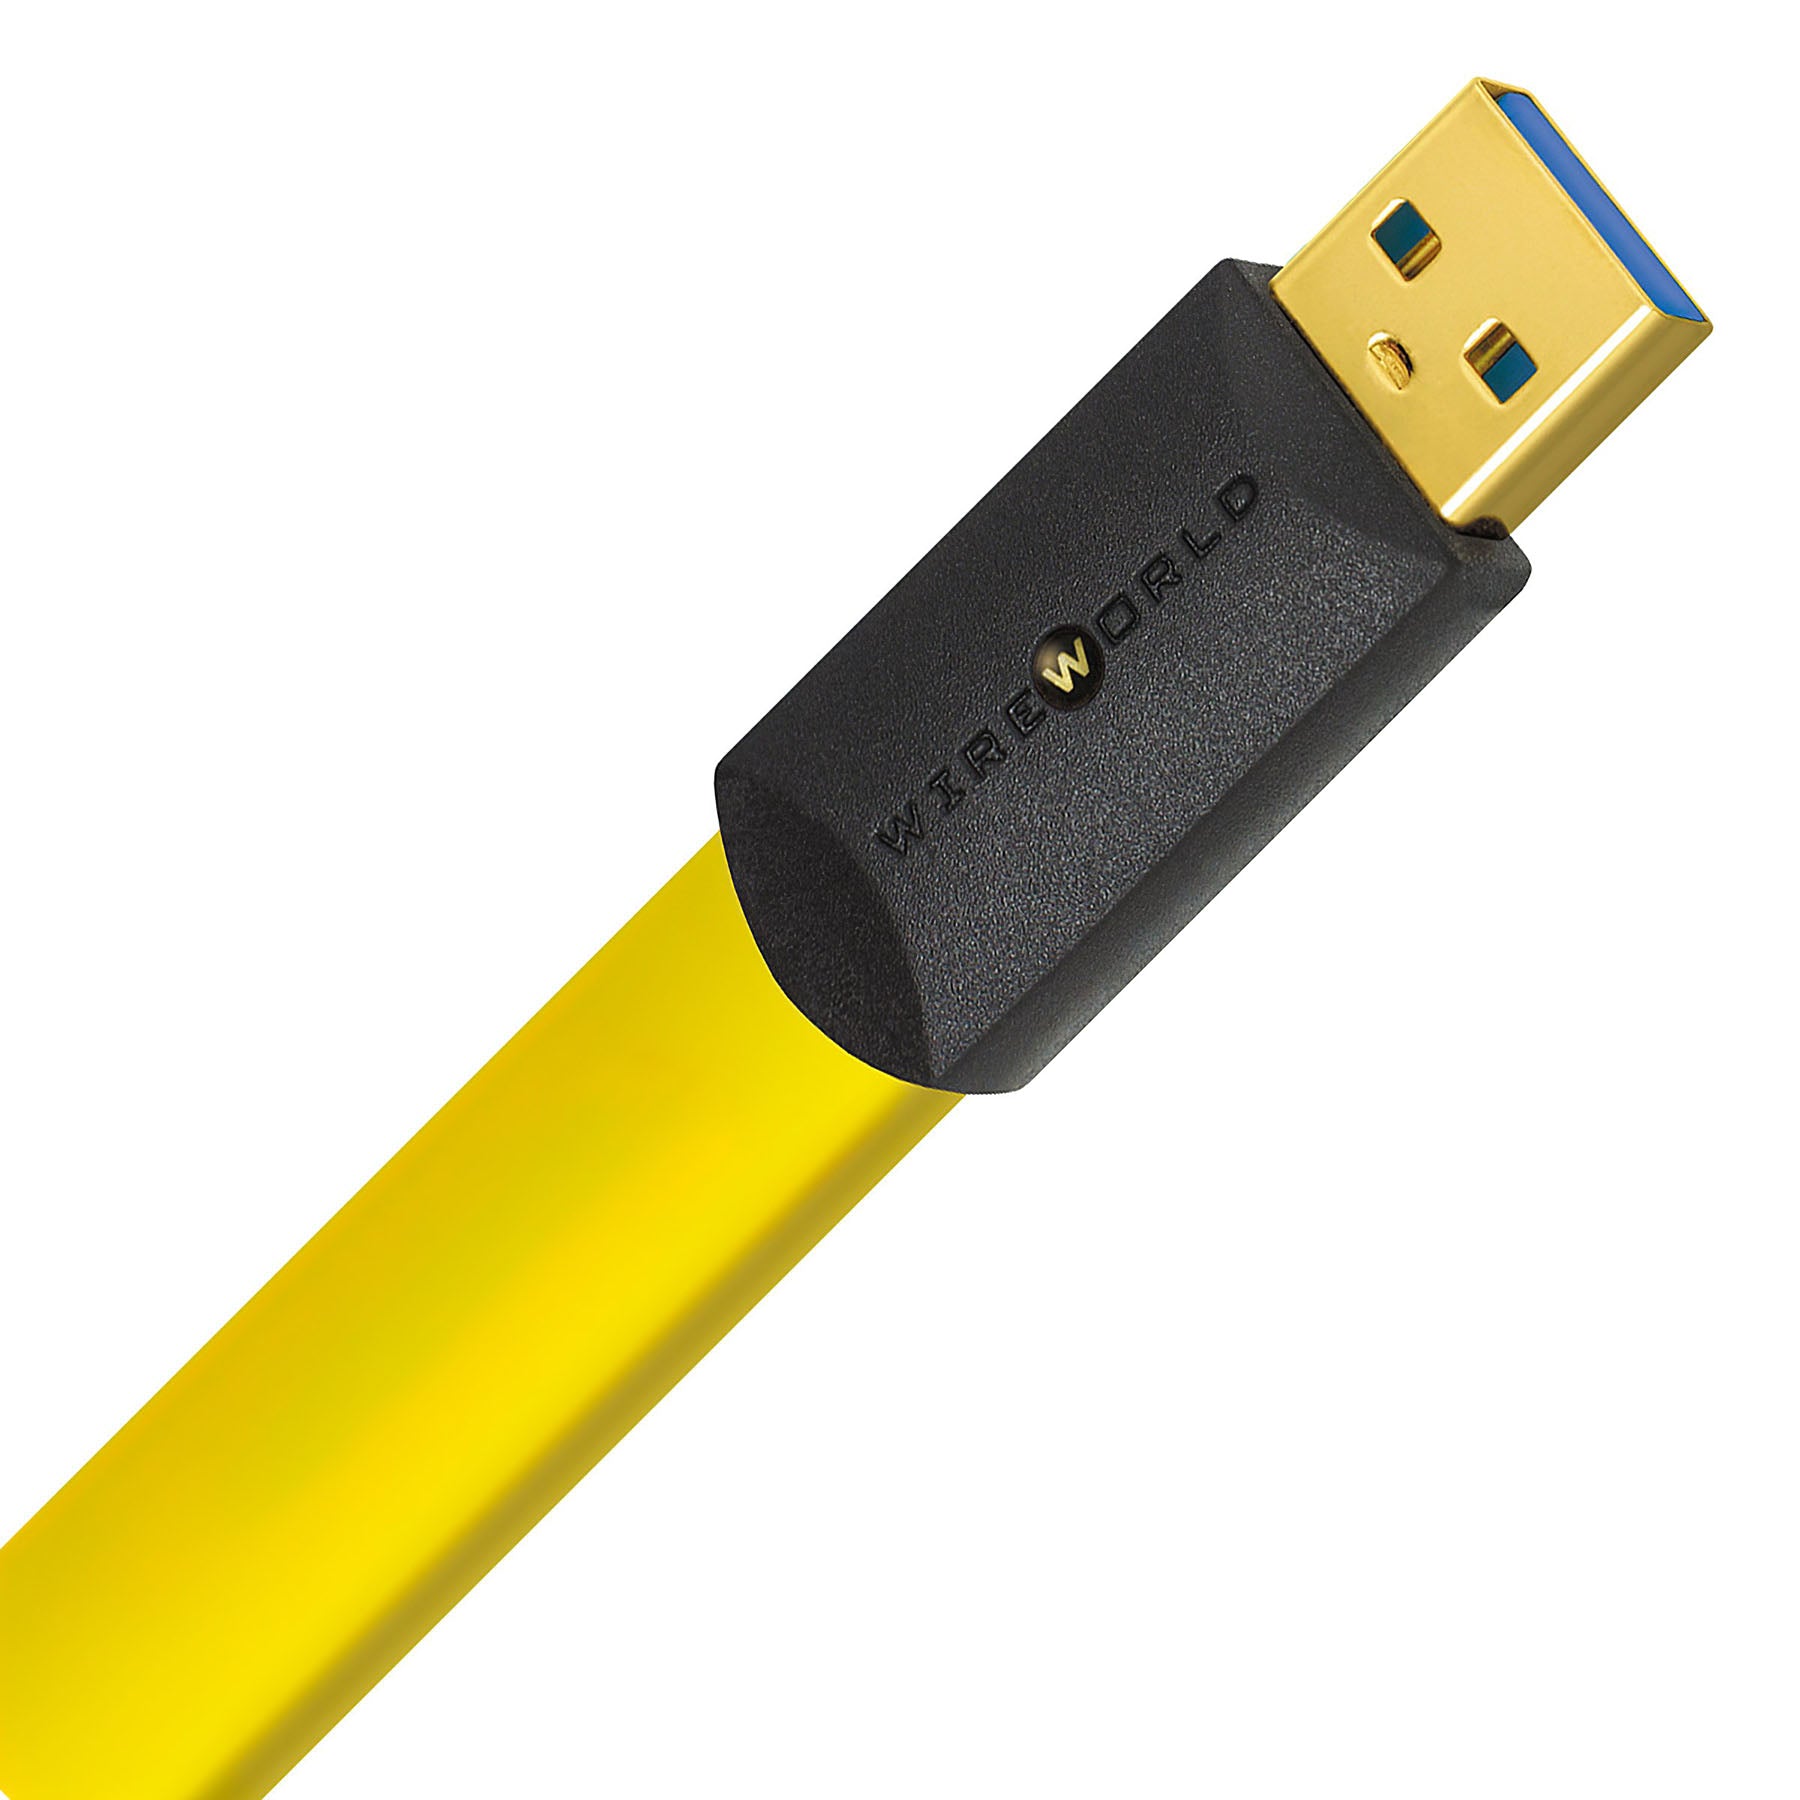 Wireworld Chroma 8 USB 3.0 Audio Cables